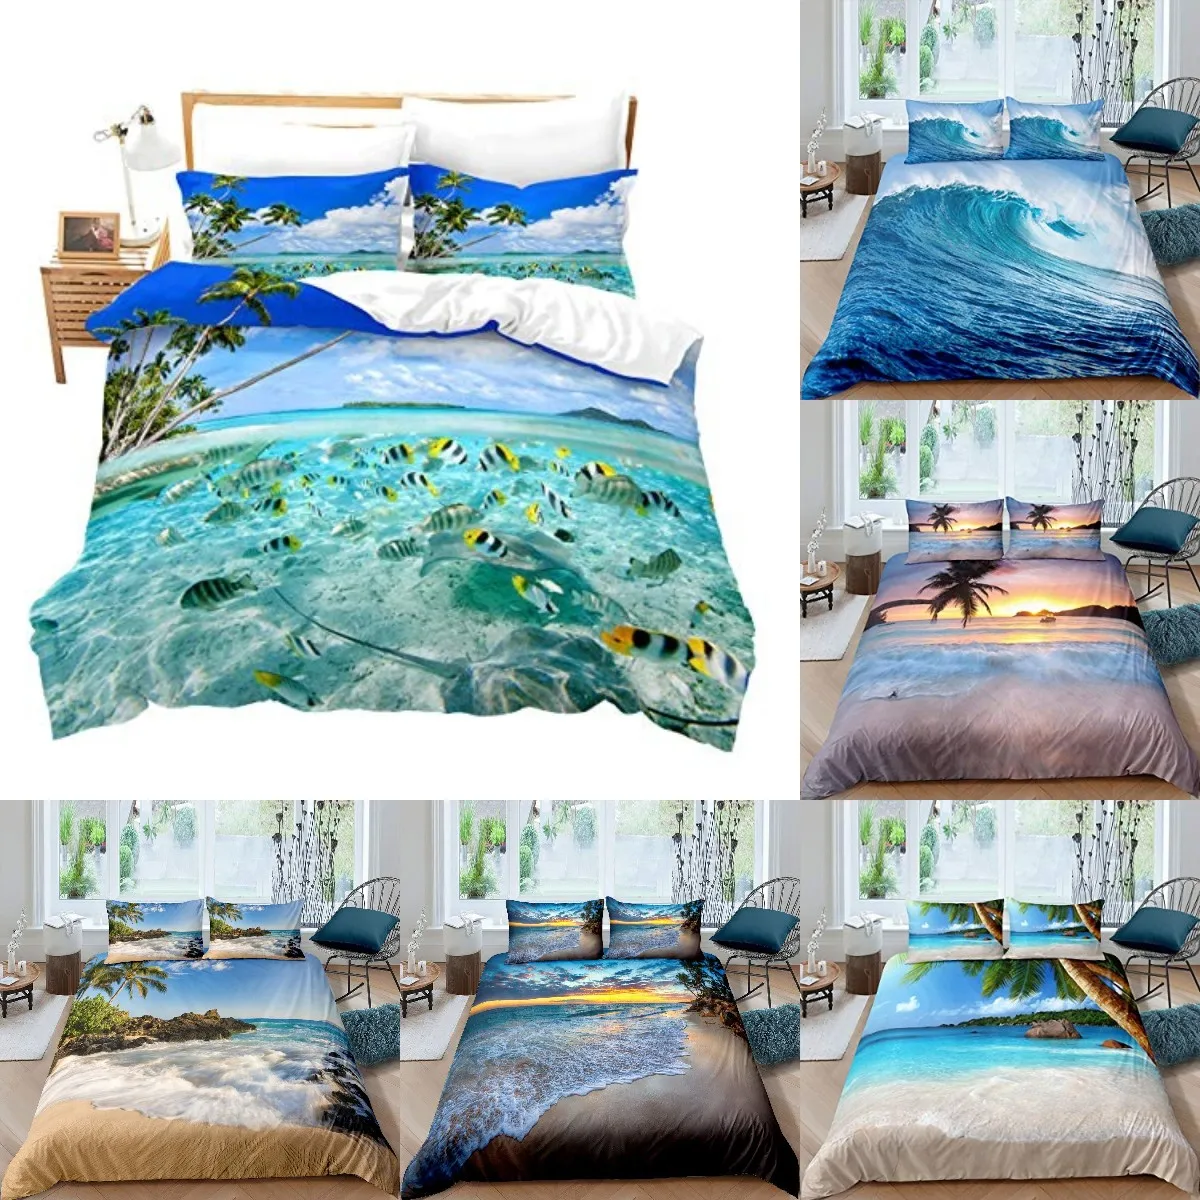 

Beach Duvet Cover Set Twin For Kids Ocean Bedding Set Bedclothes Hawaiian Tropical Printed Microfiber Polyester Comforter Cover